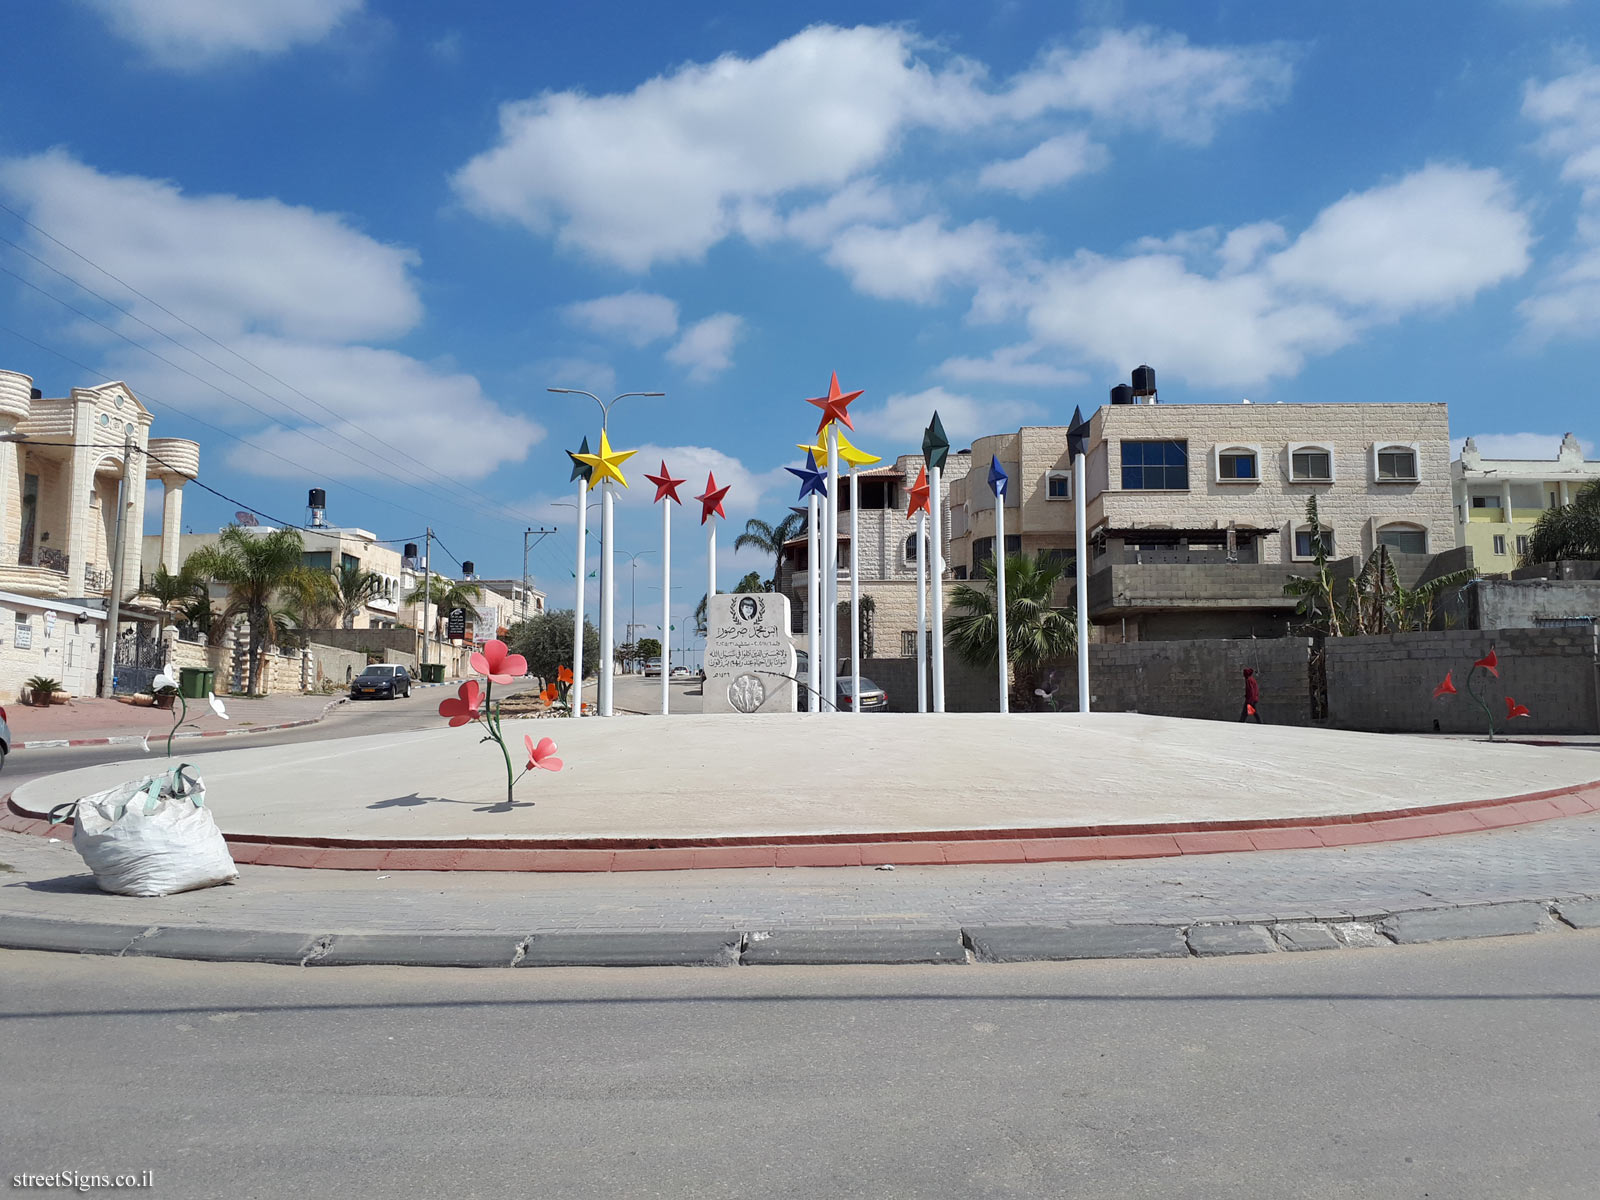 Kafr Qasem - Square to commemorate one of the fallen - El-Khalil St, Kfar Qasim, Israel